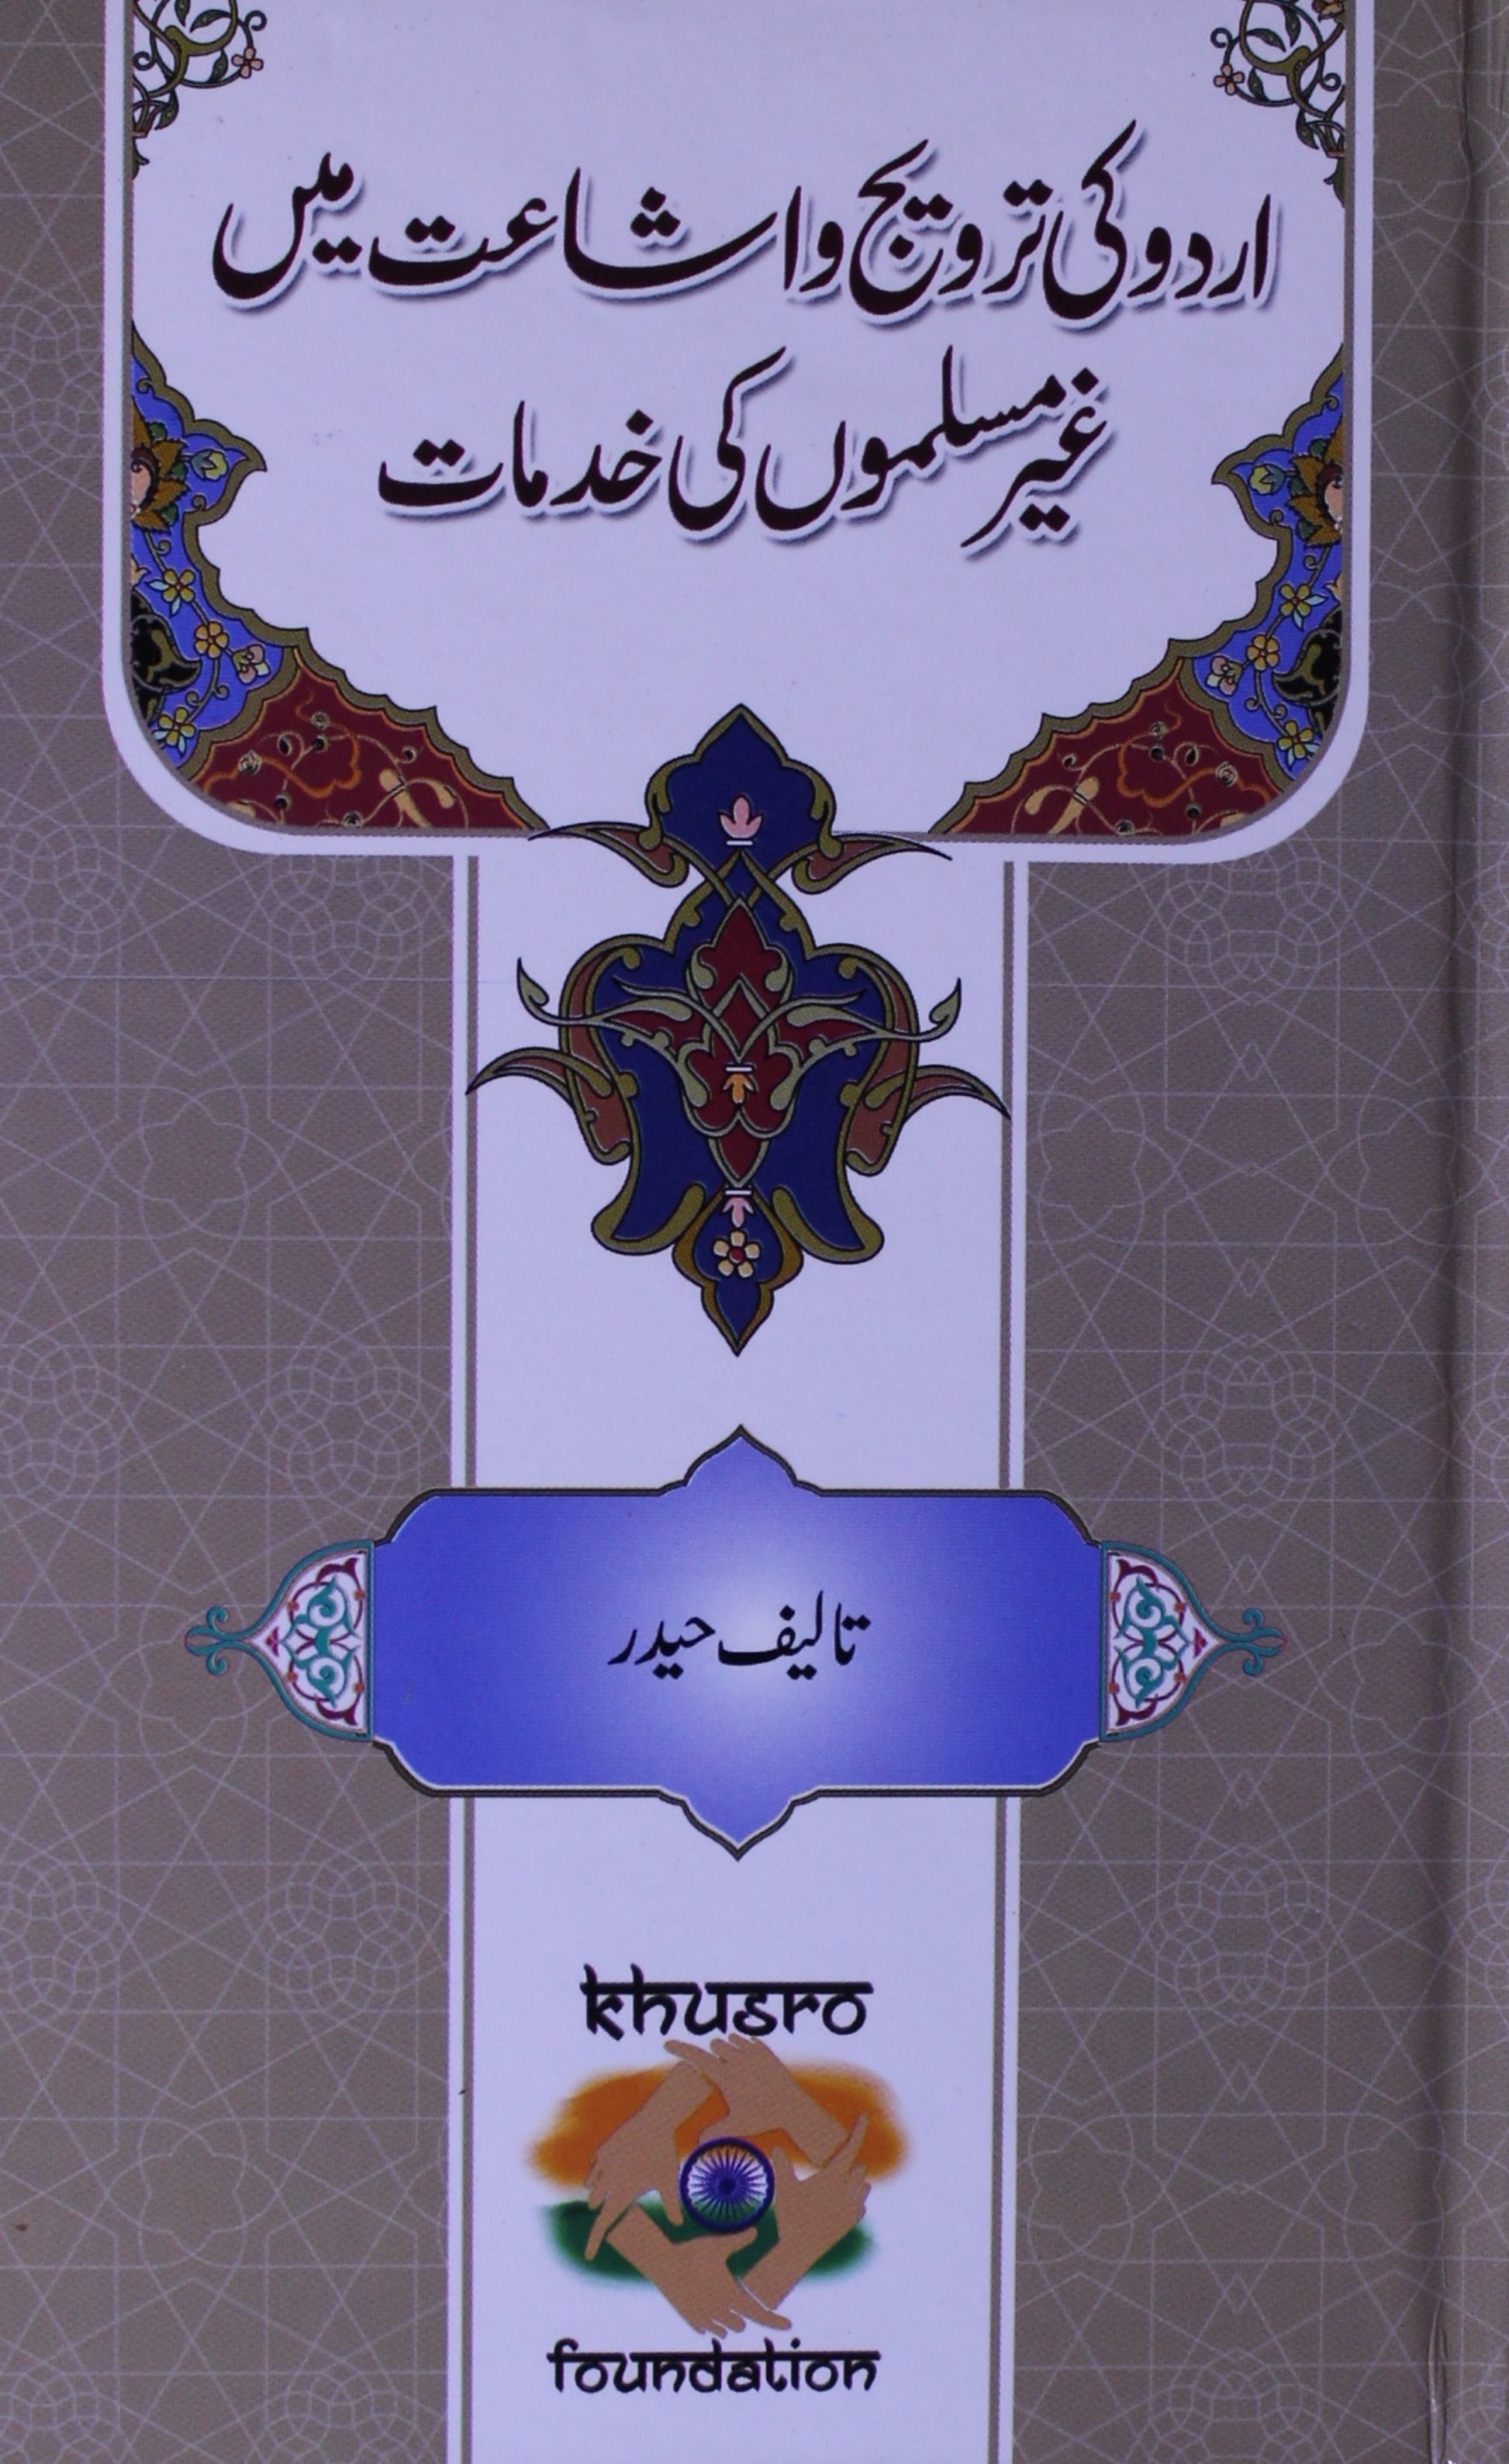 Urdu Ki Tarweej O Isha' At Mein Ghair Muslimon Ki Khidmat